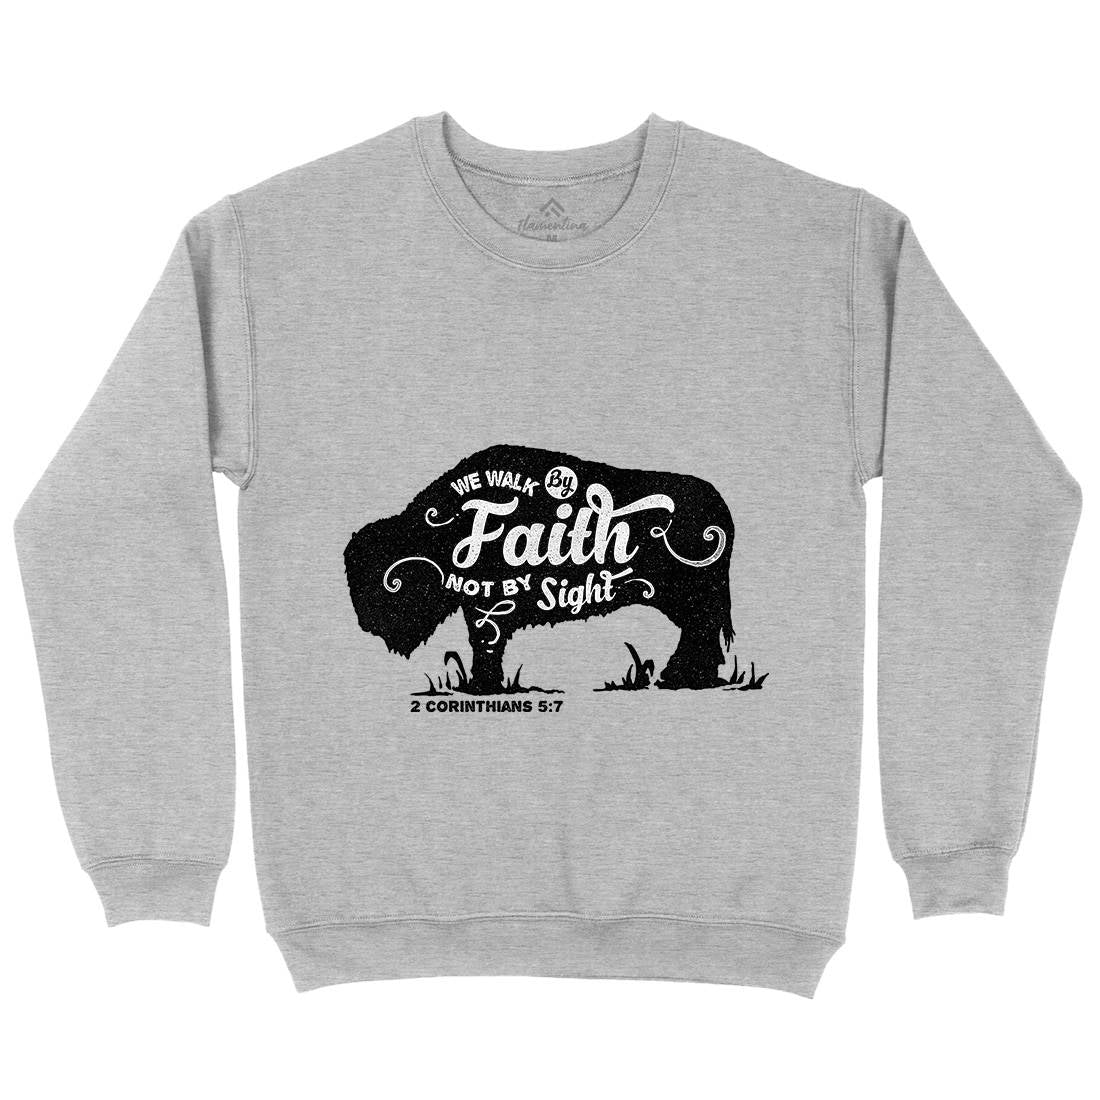 We Walk By Faith Kids Crew Neck Sweatshirt Religion A392